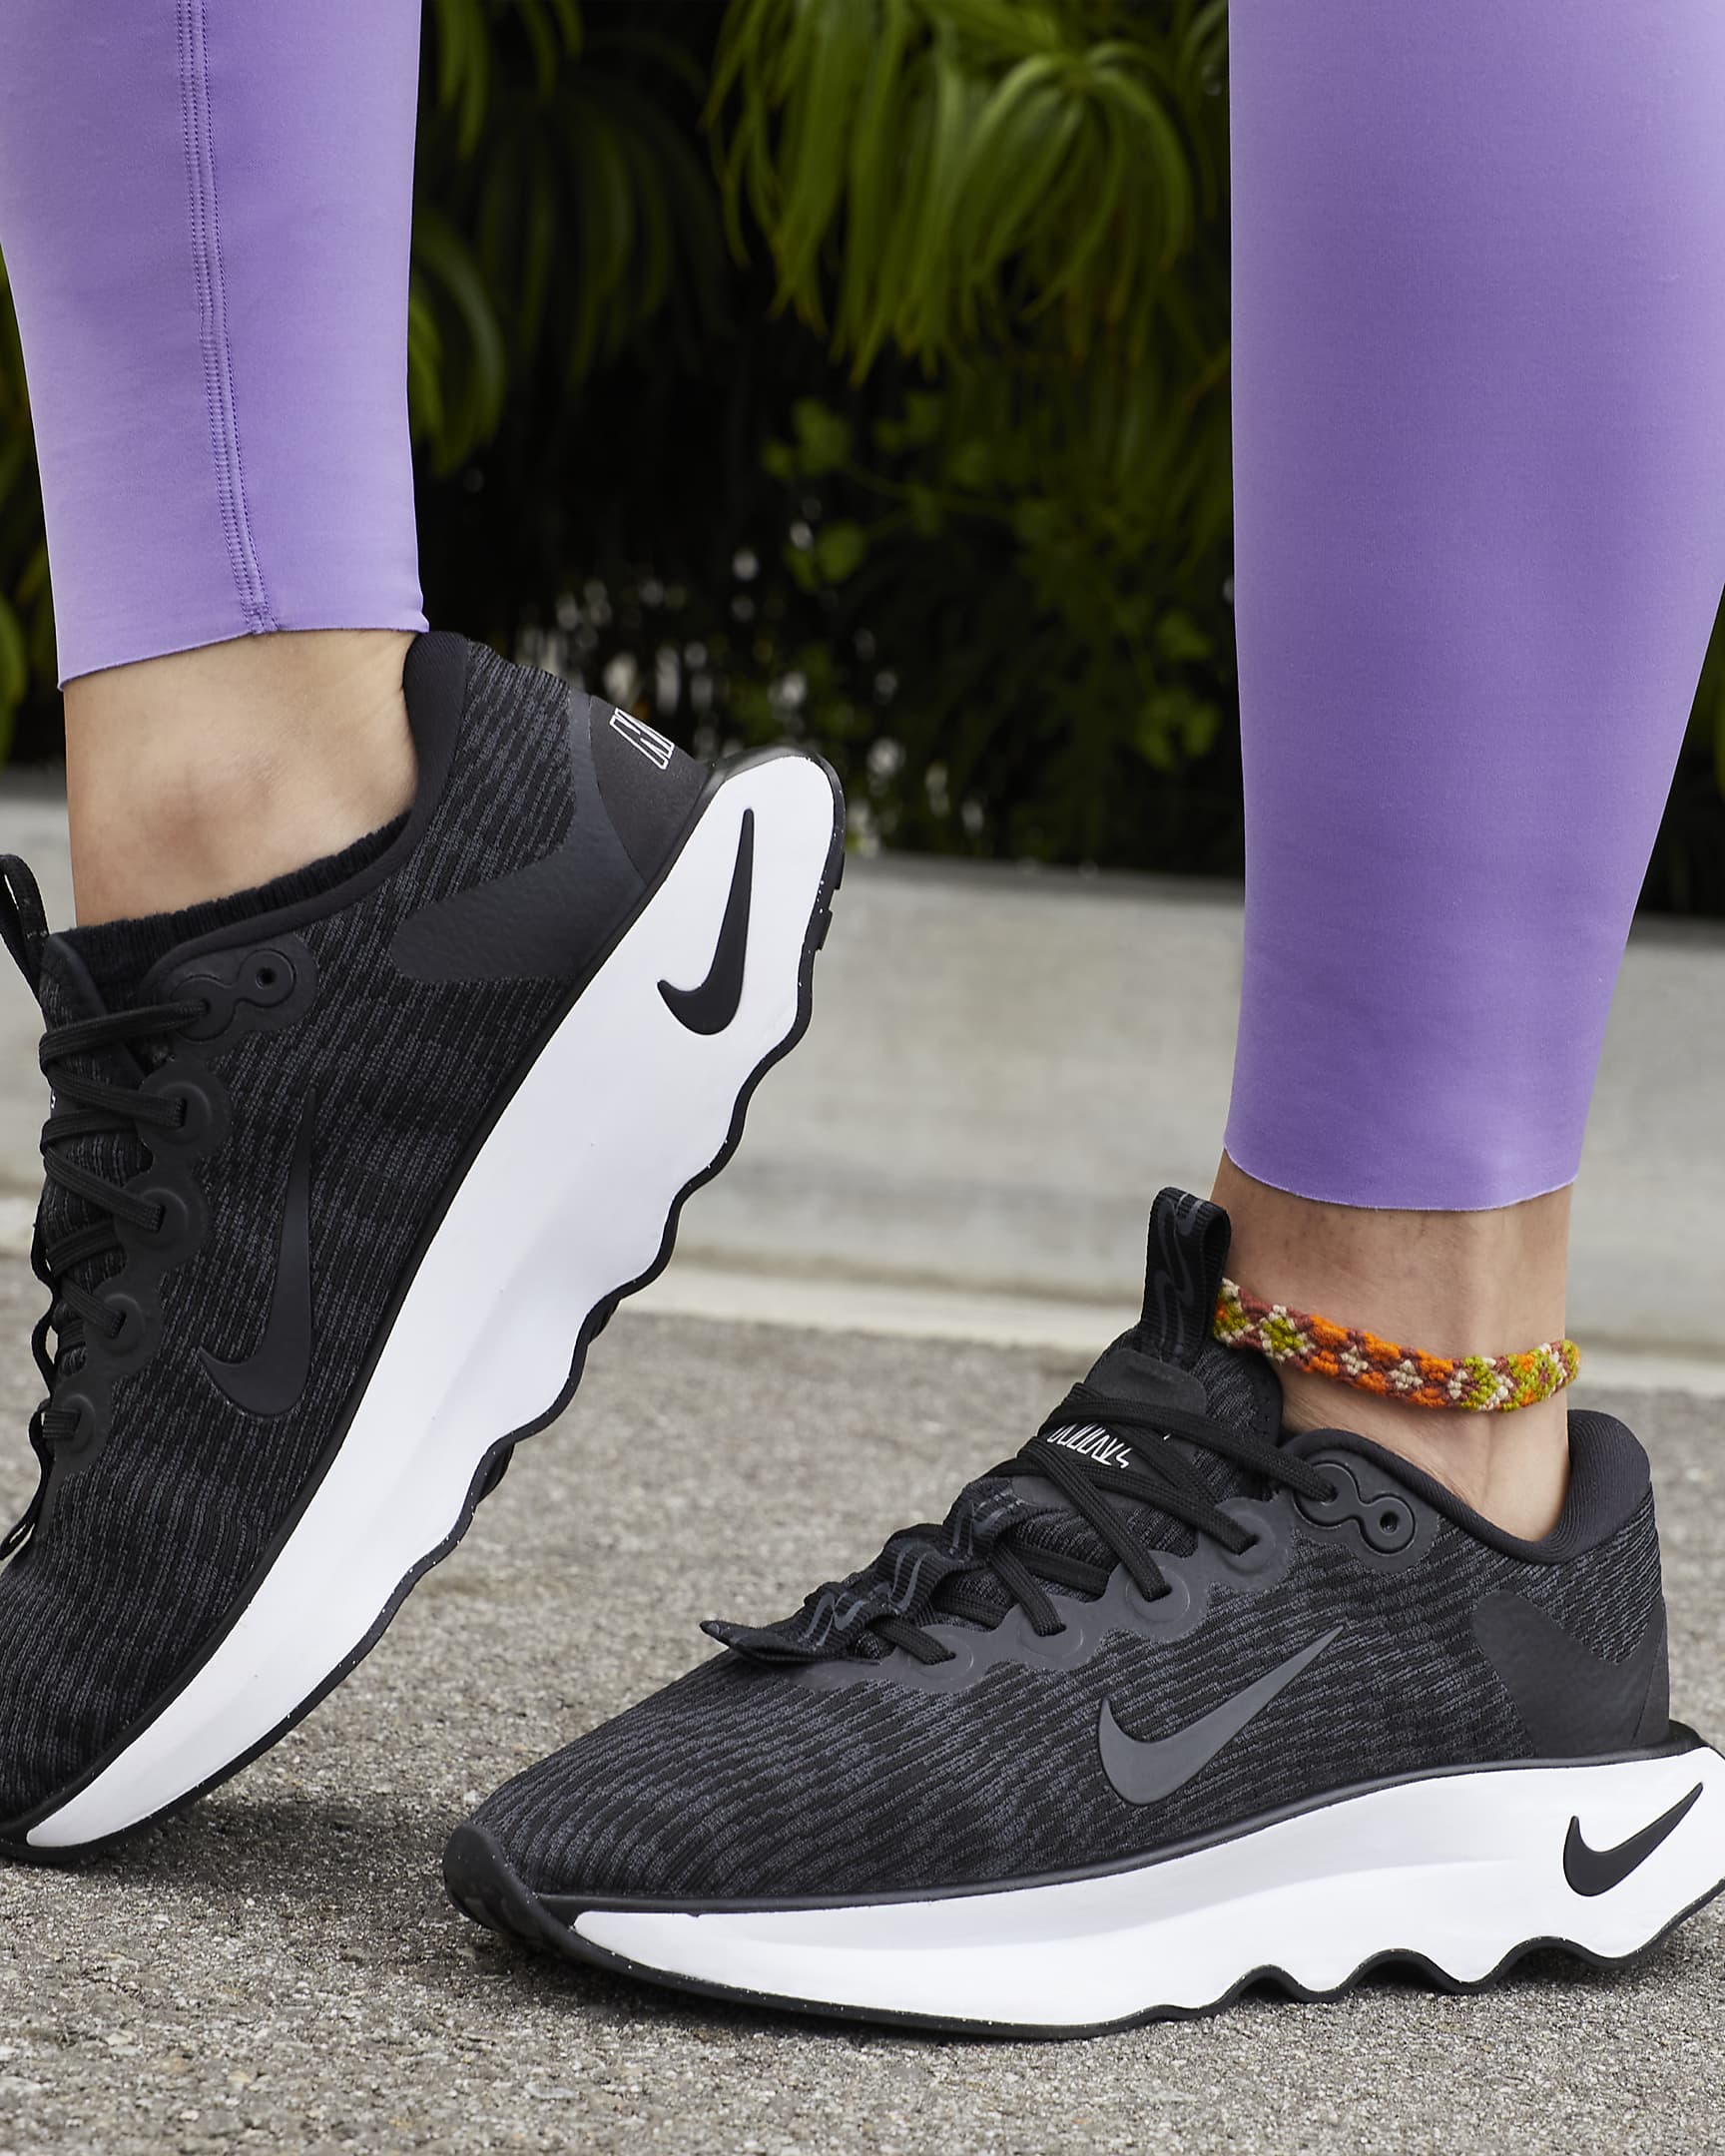 Scarpa da camminata Nike Motiva – Donna - Nero/Antracite/Bianco/Nero